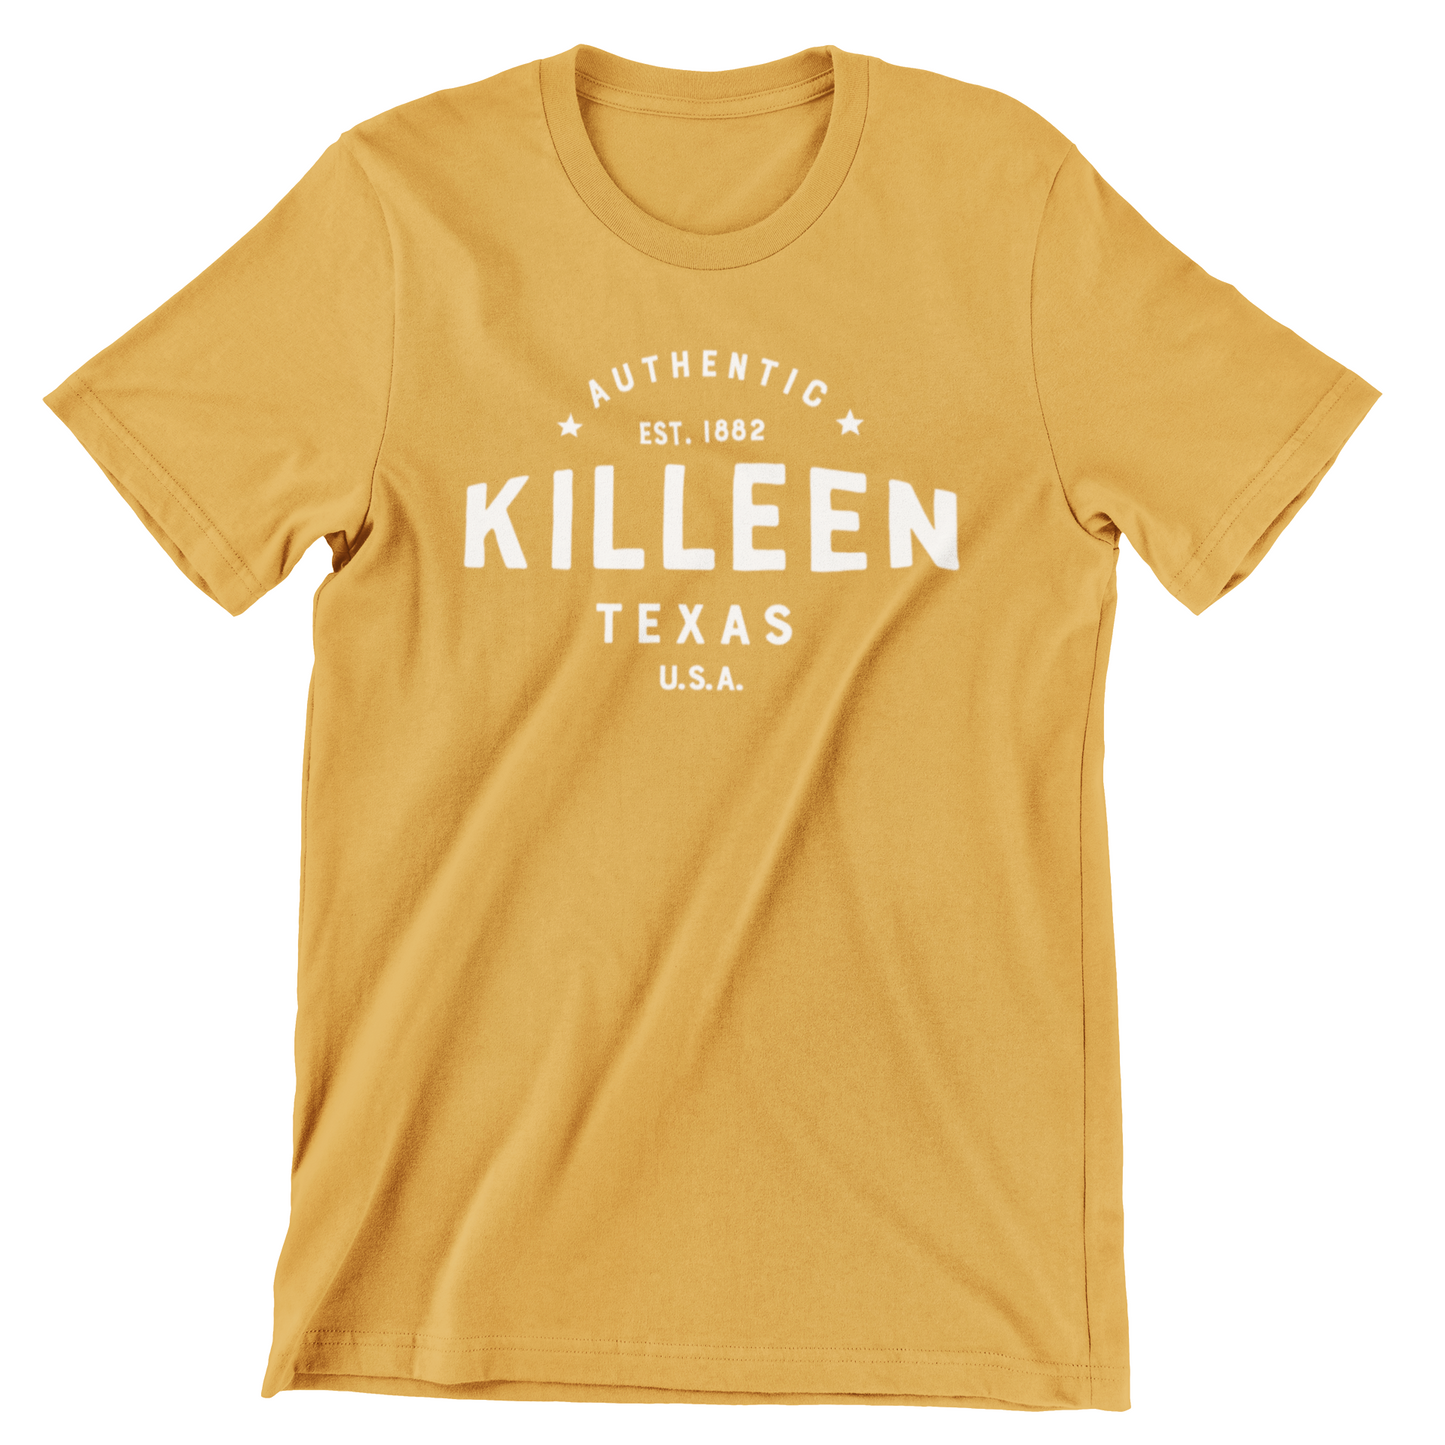 Killeen Texas T-shirt - Authentic